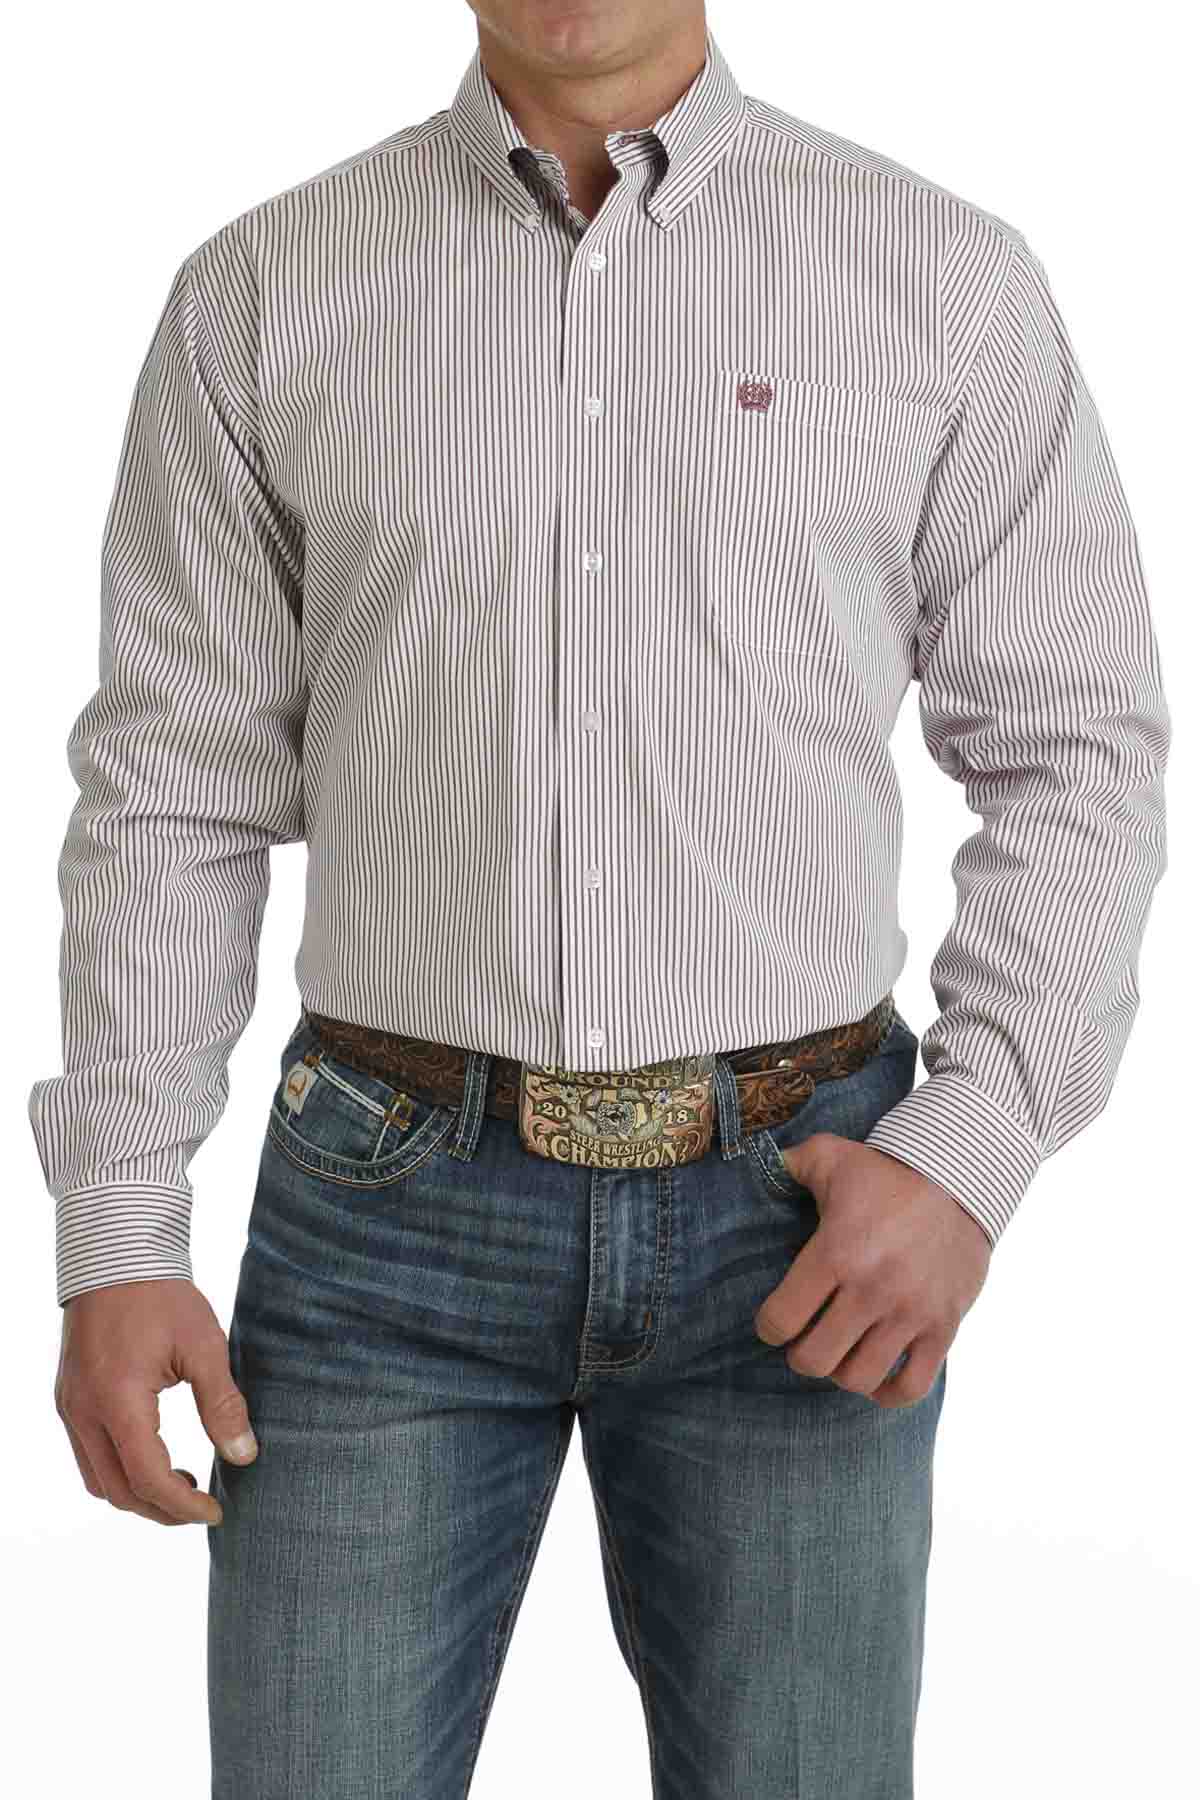 Men's Long-Sleeve Striped Button-Down Western Shirt by Cinch